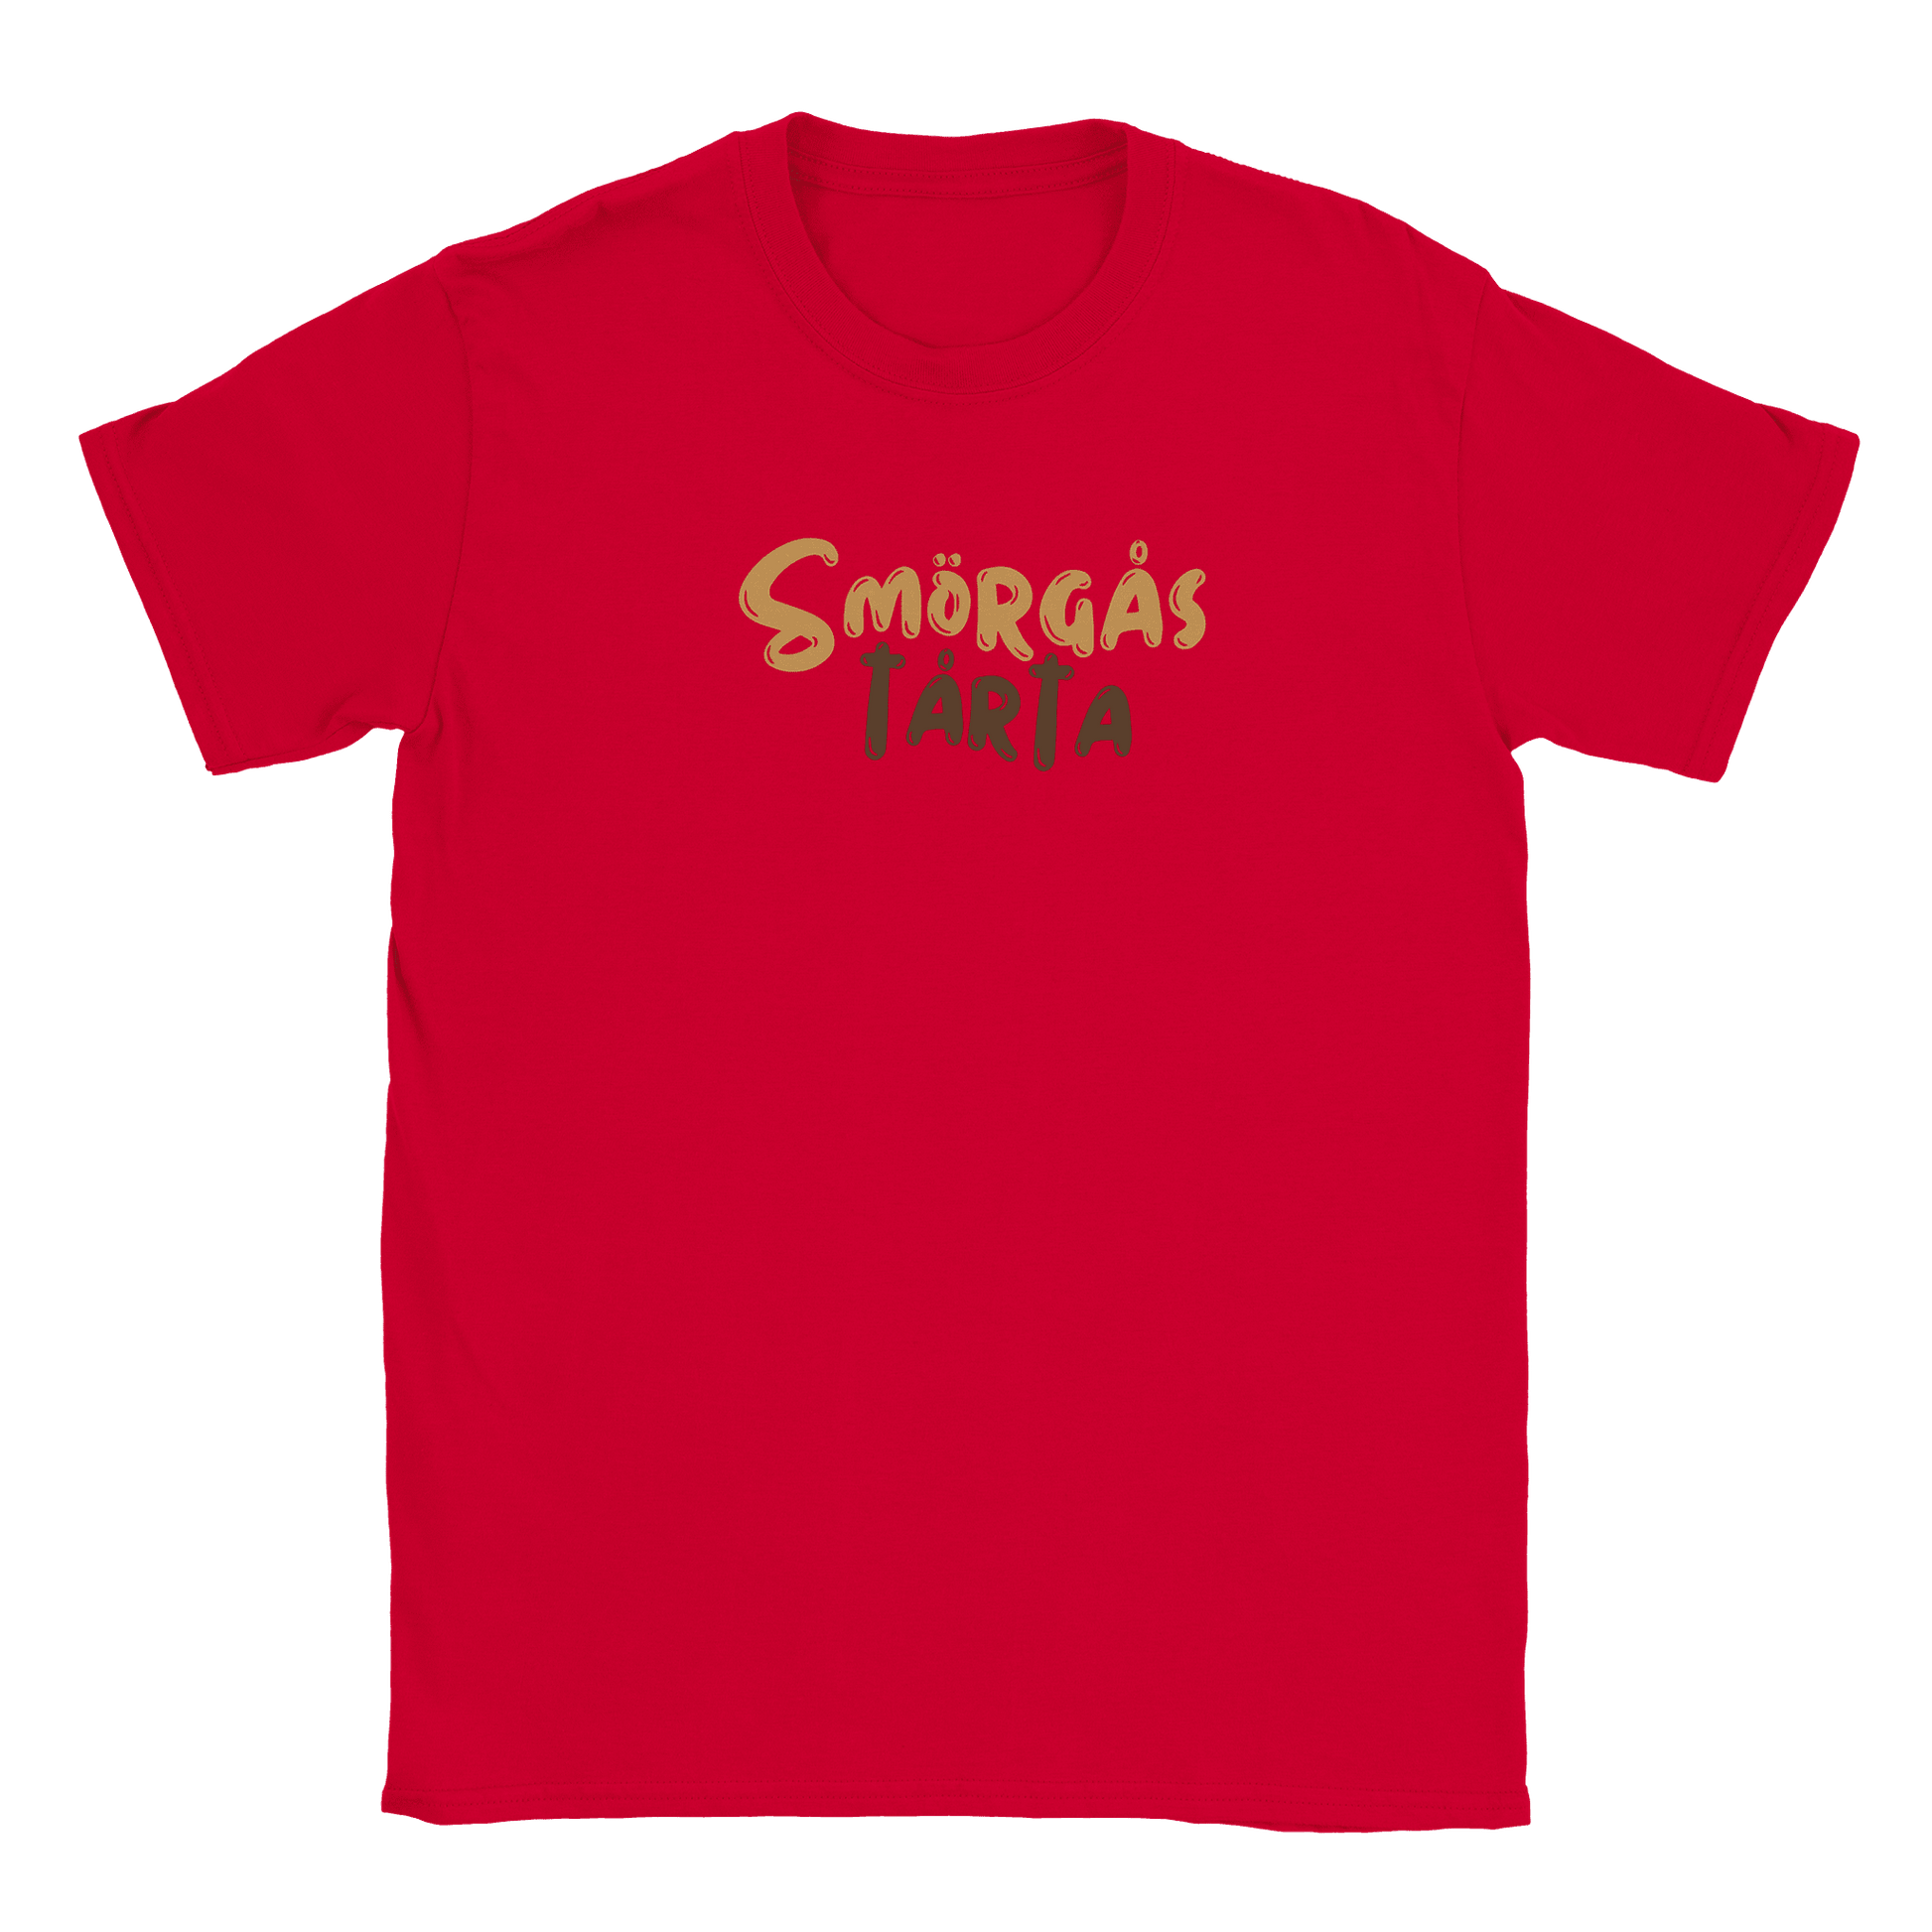 Smörgåstårta - T-shirt Röd